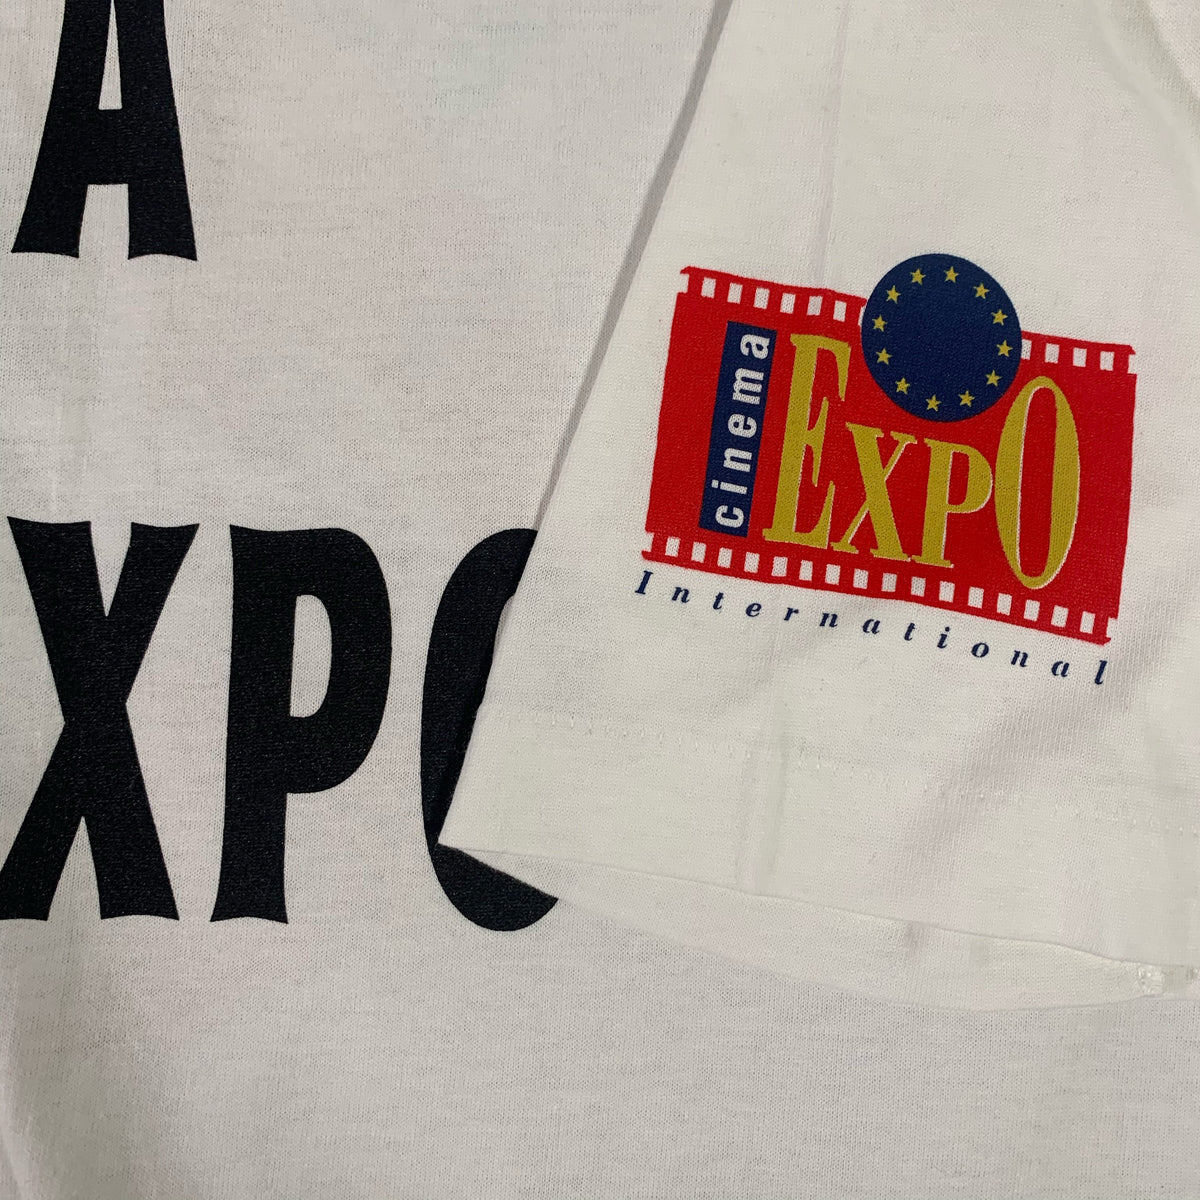 Vintage Cinema Expo International &quot;Coca-Cola&quot; T-Shirt